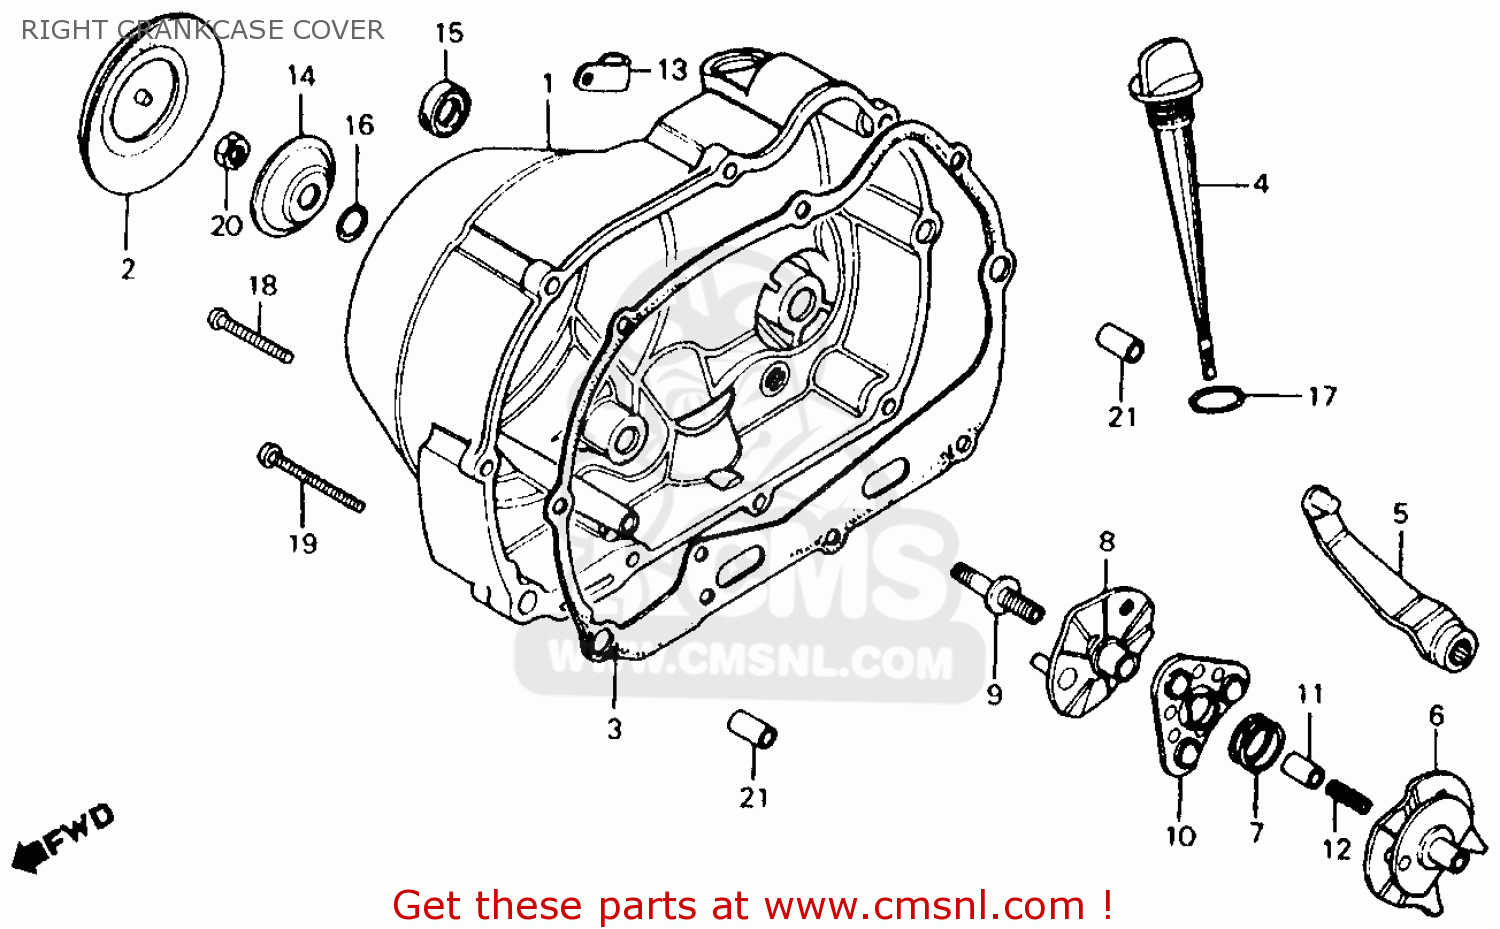 Honda ct110 engine parts #6